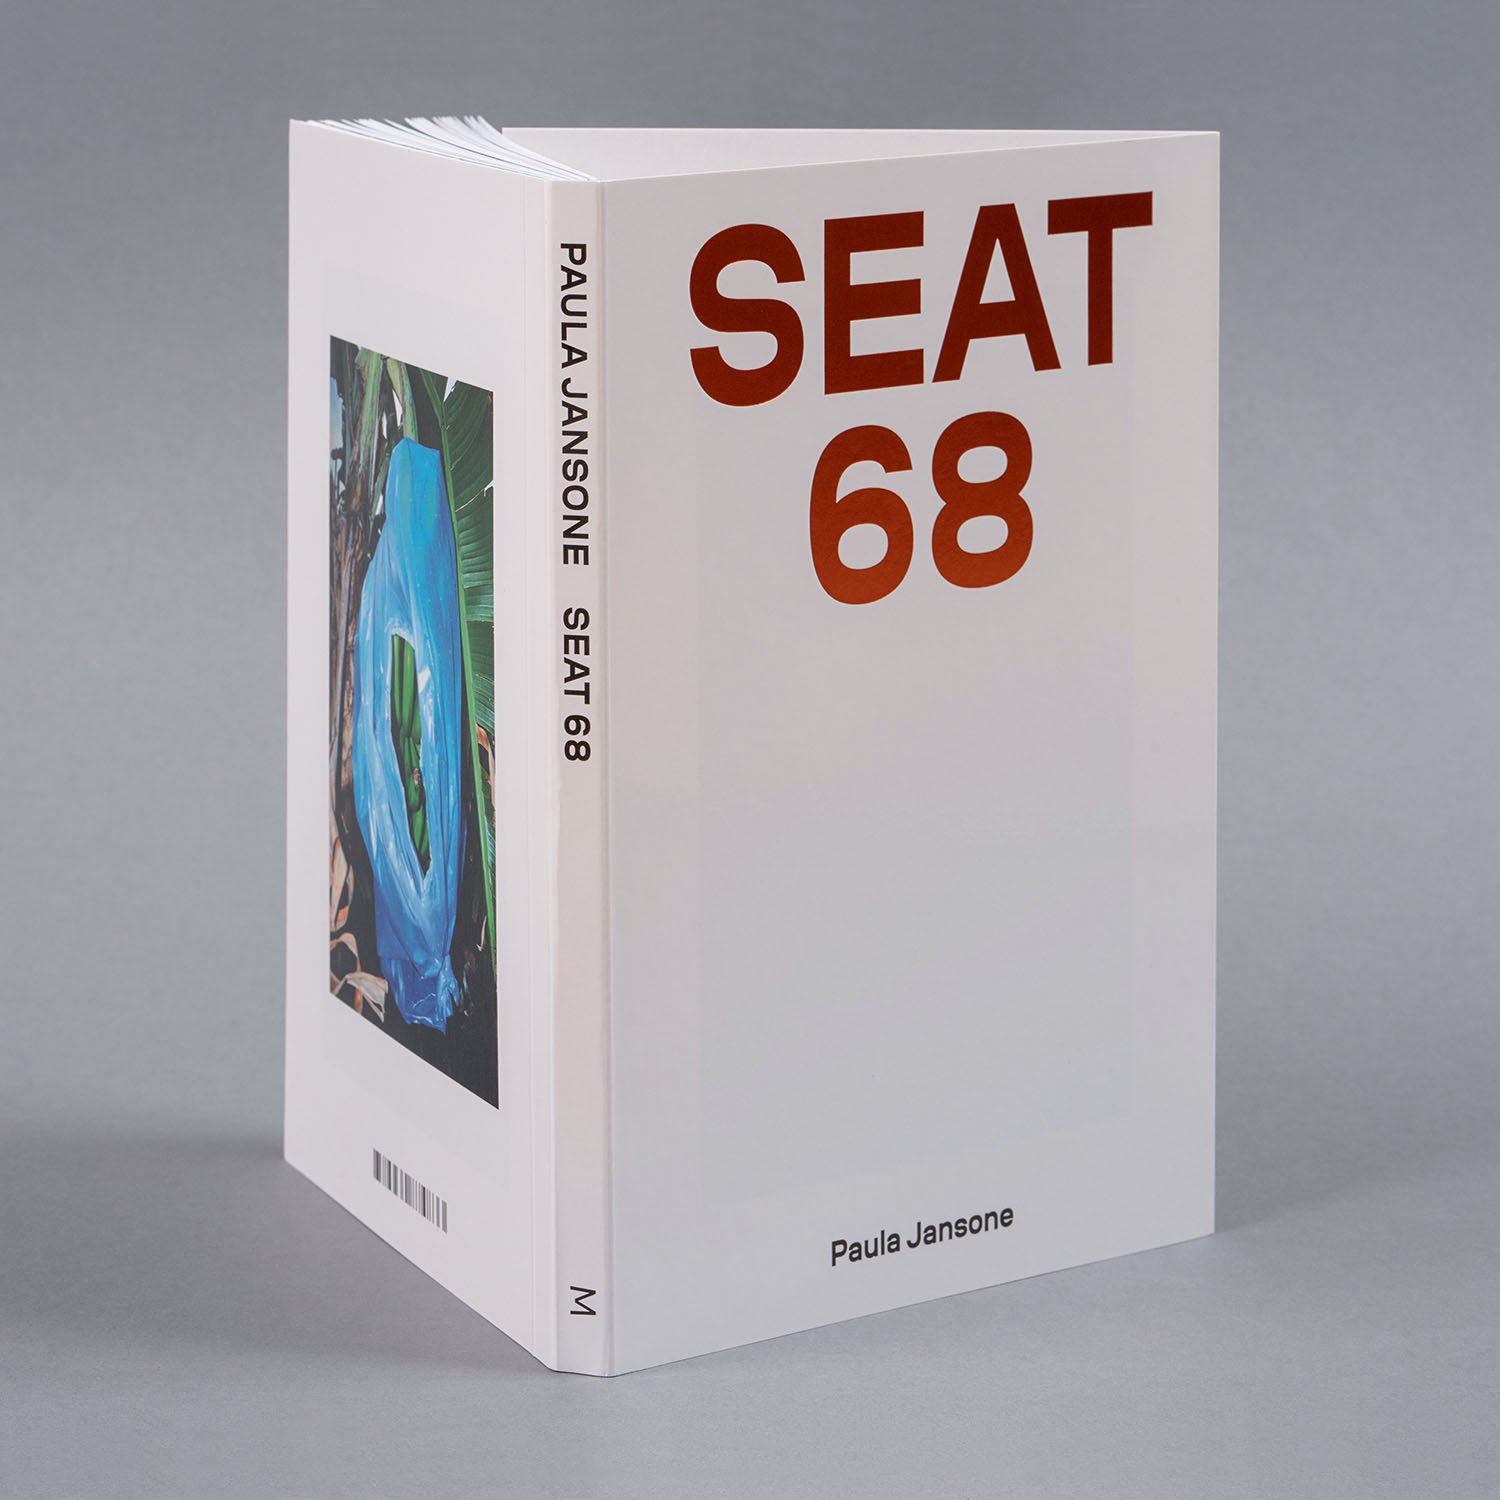 Image of Seat 68